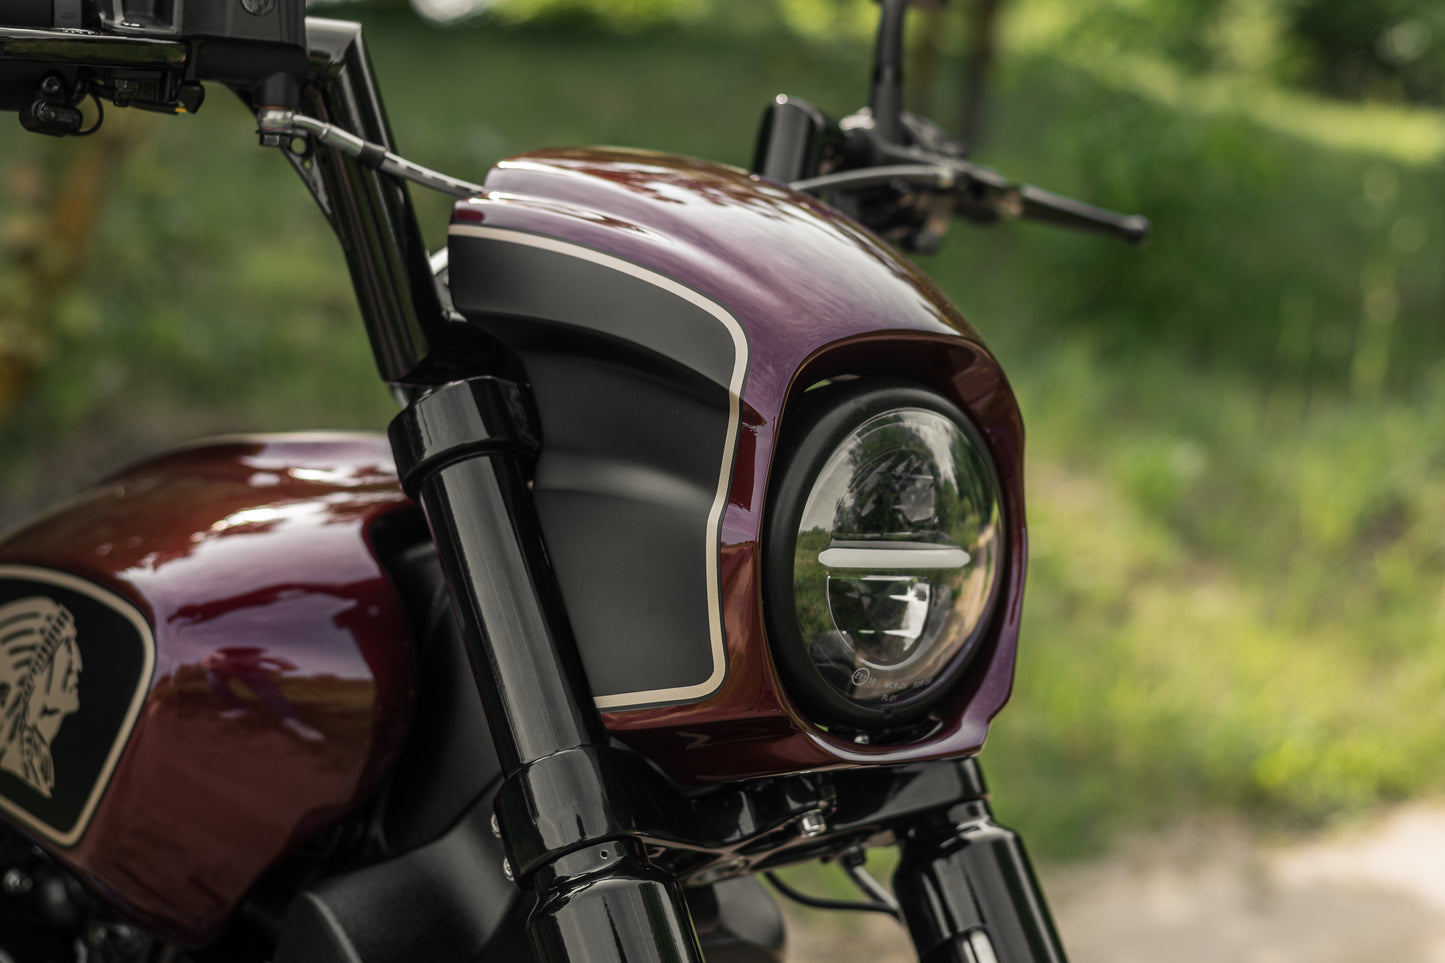 Zoomed Harley Davidson motorcycle with Killer Custom "Tomahawk" series headlight fairing green blurred background